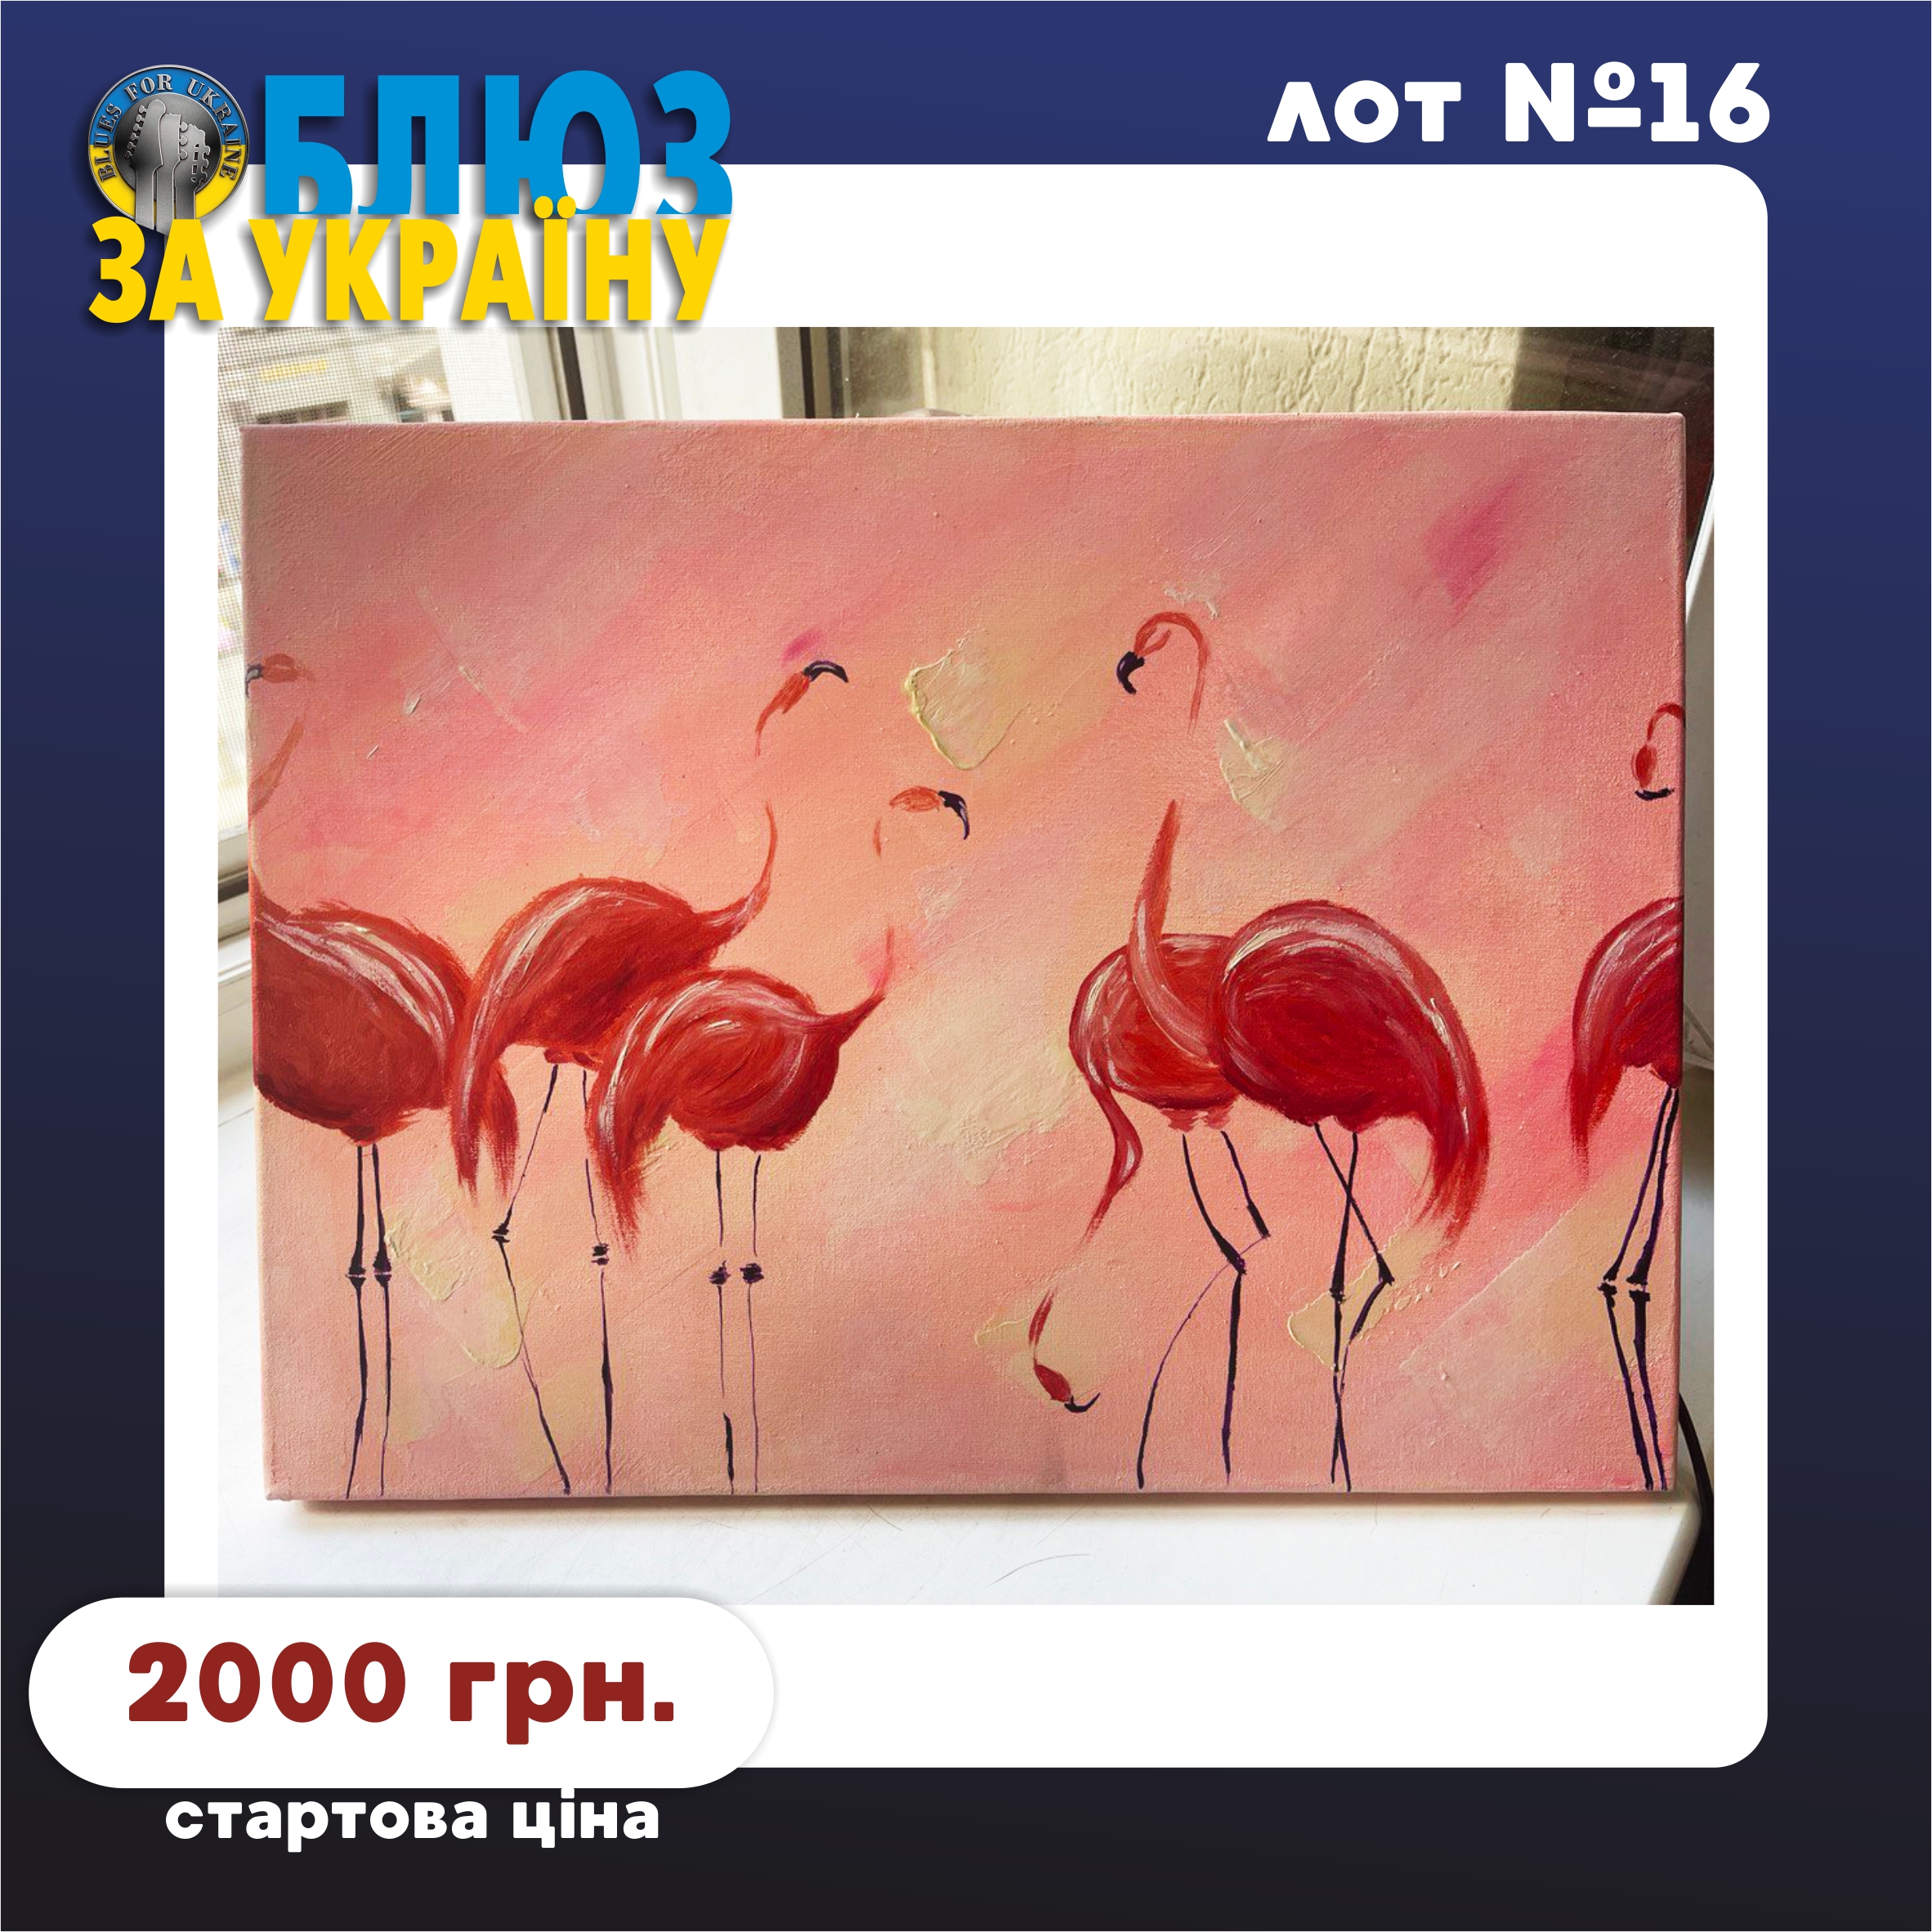 Lot №16. Картина "Фламінго" (Painting "Flamingo")